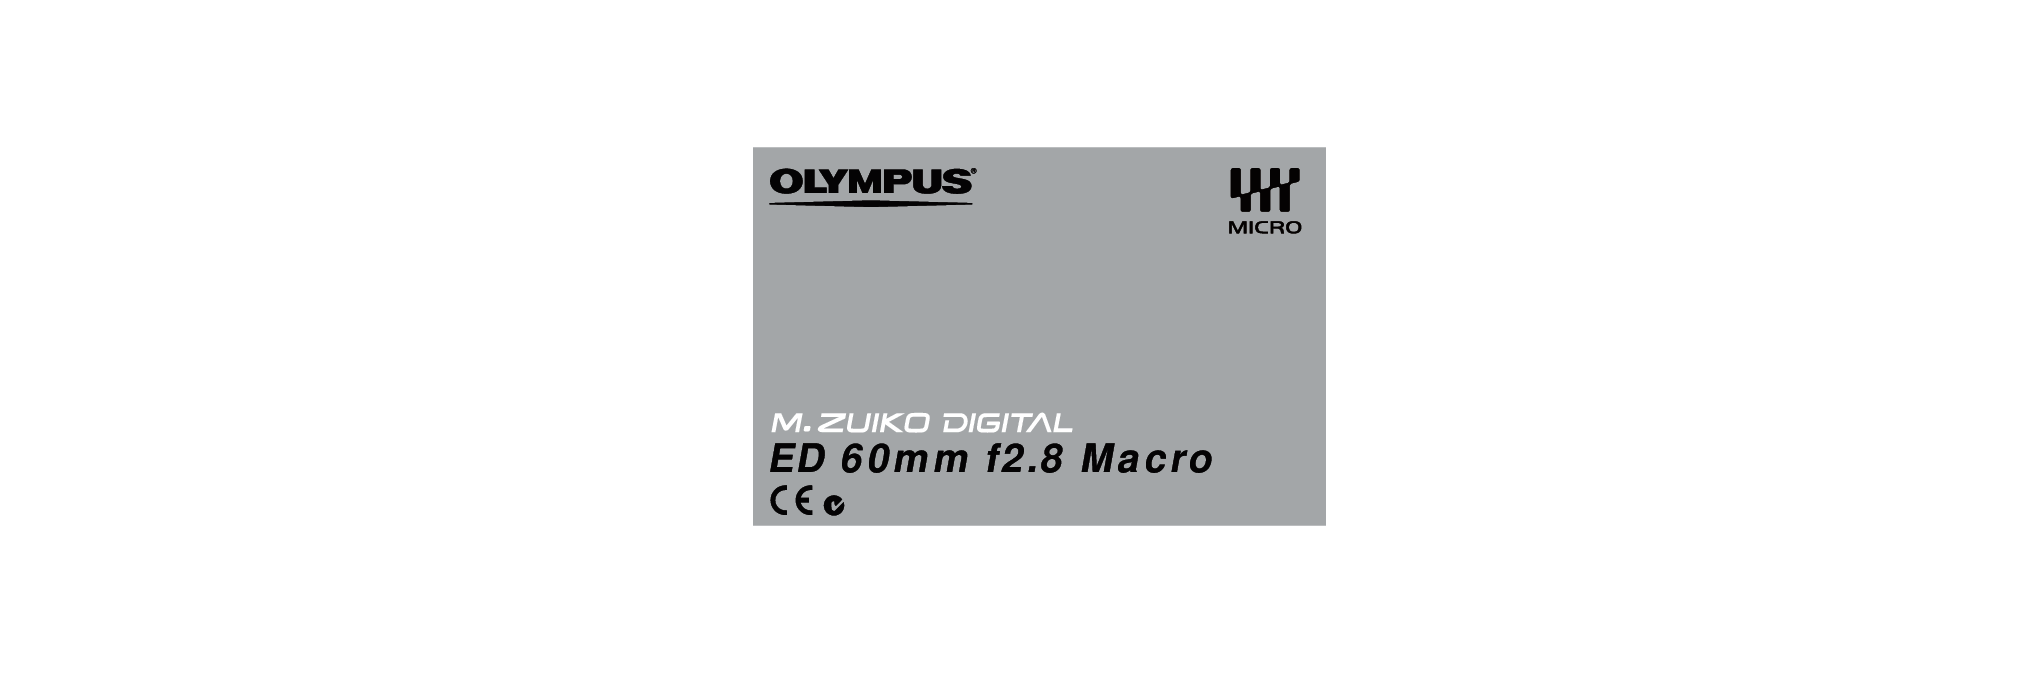 奥林巴斯 Olympus ED 60mm f2.8 Macro 使用说明书 封面